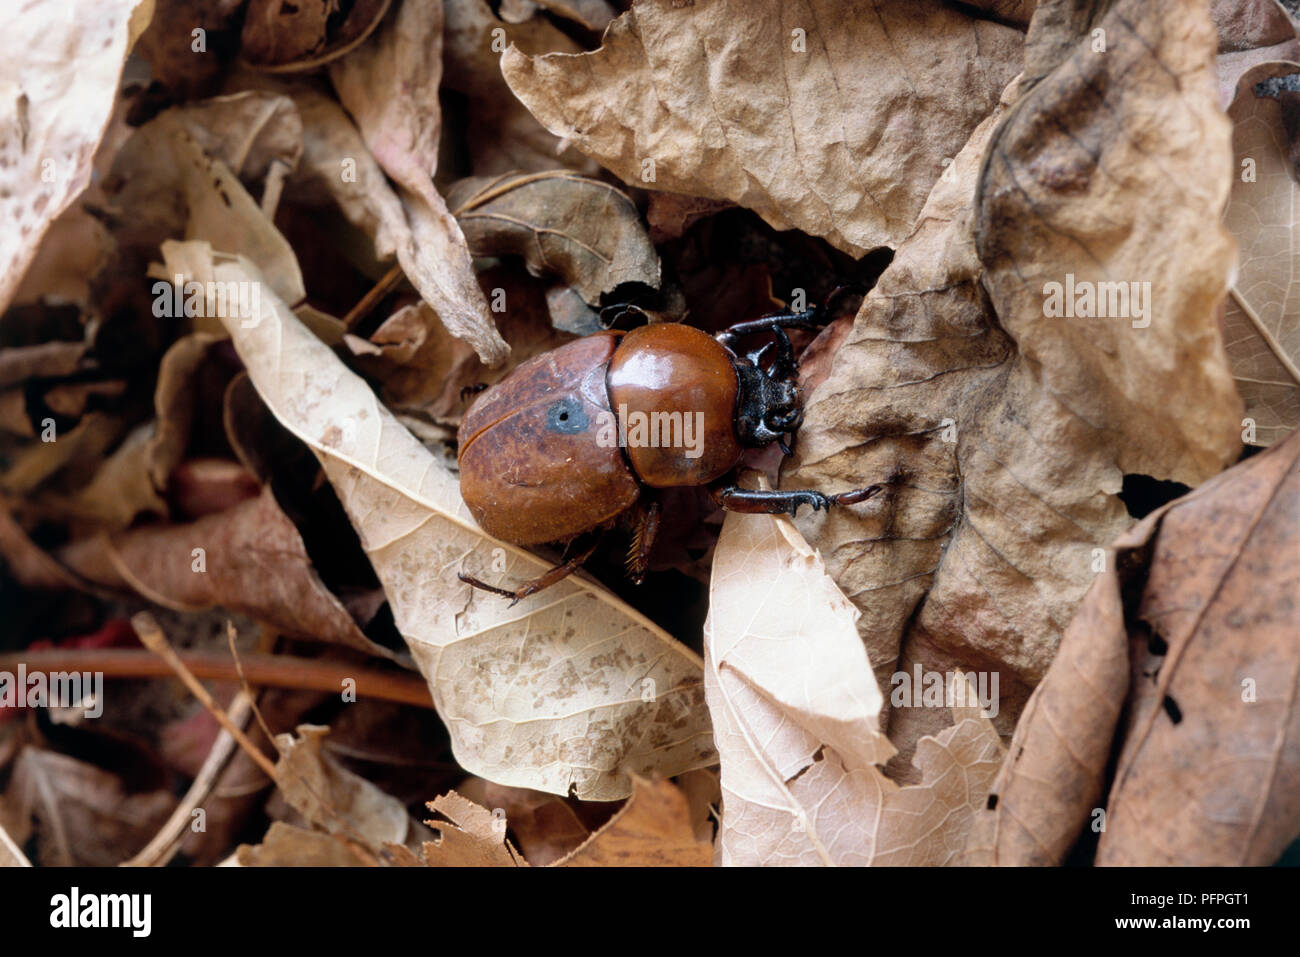 Il Vietnam, Cuc Phoung National Park, scarabeo marrone sulle foglie essiccate di sottobosco, close-up Foto Stock